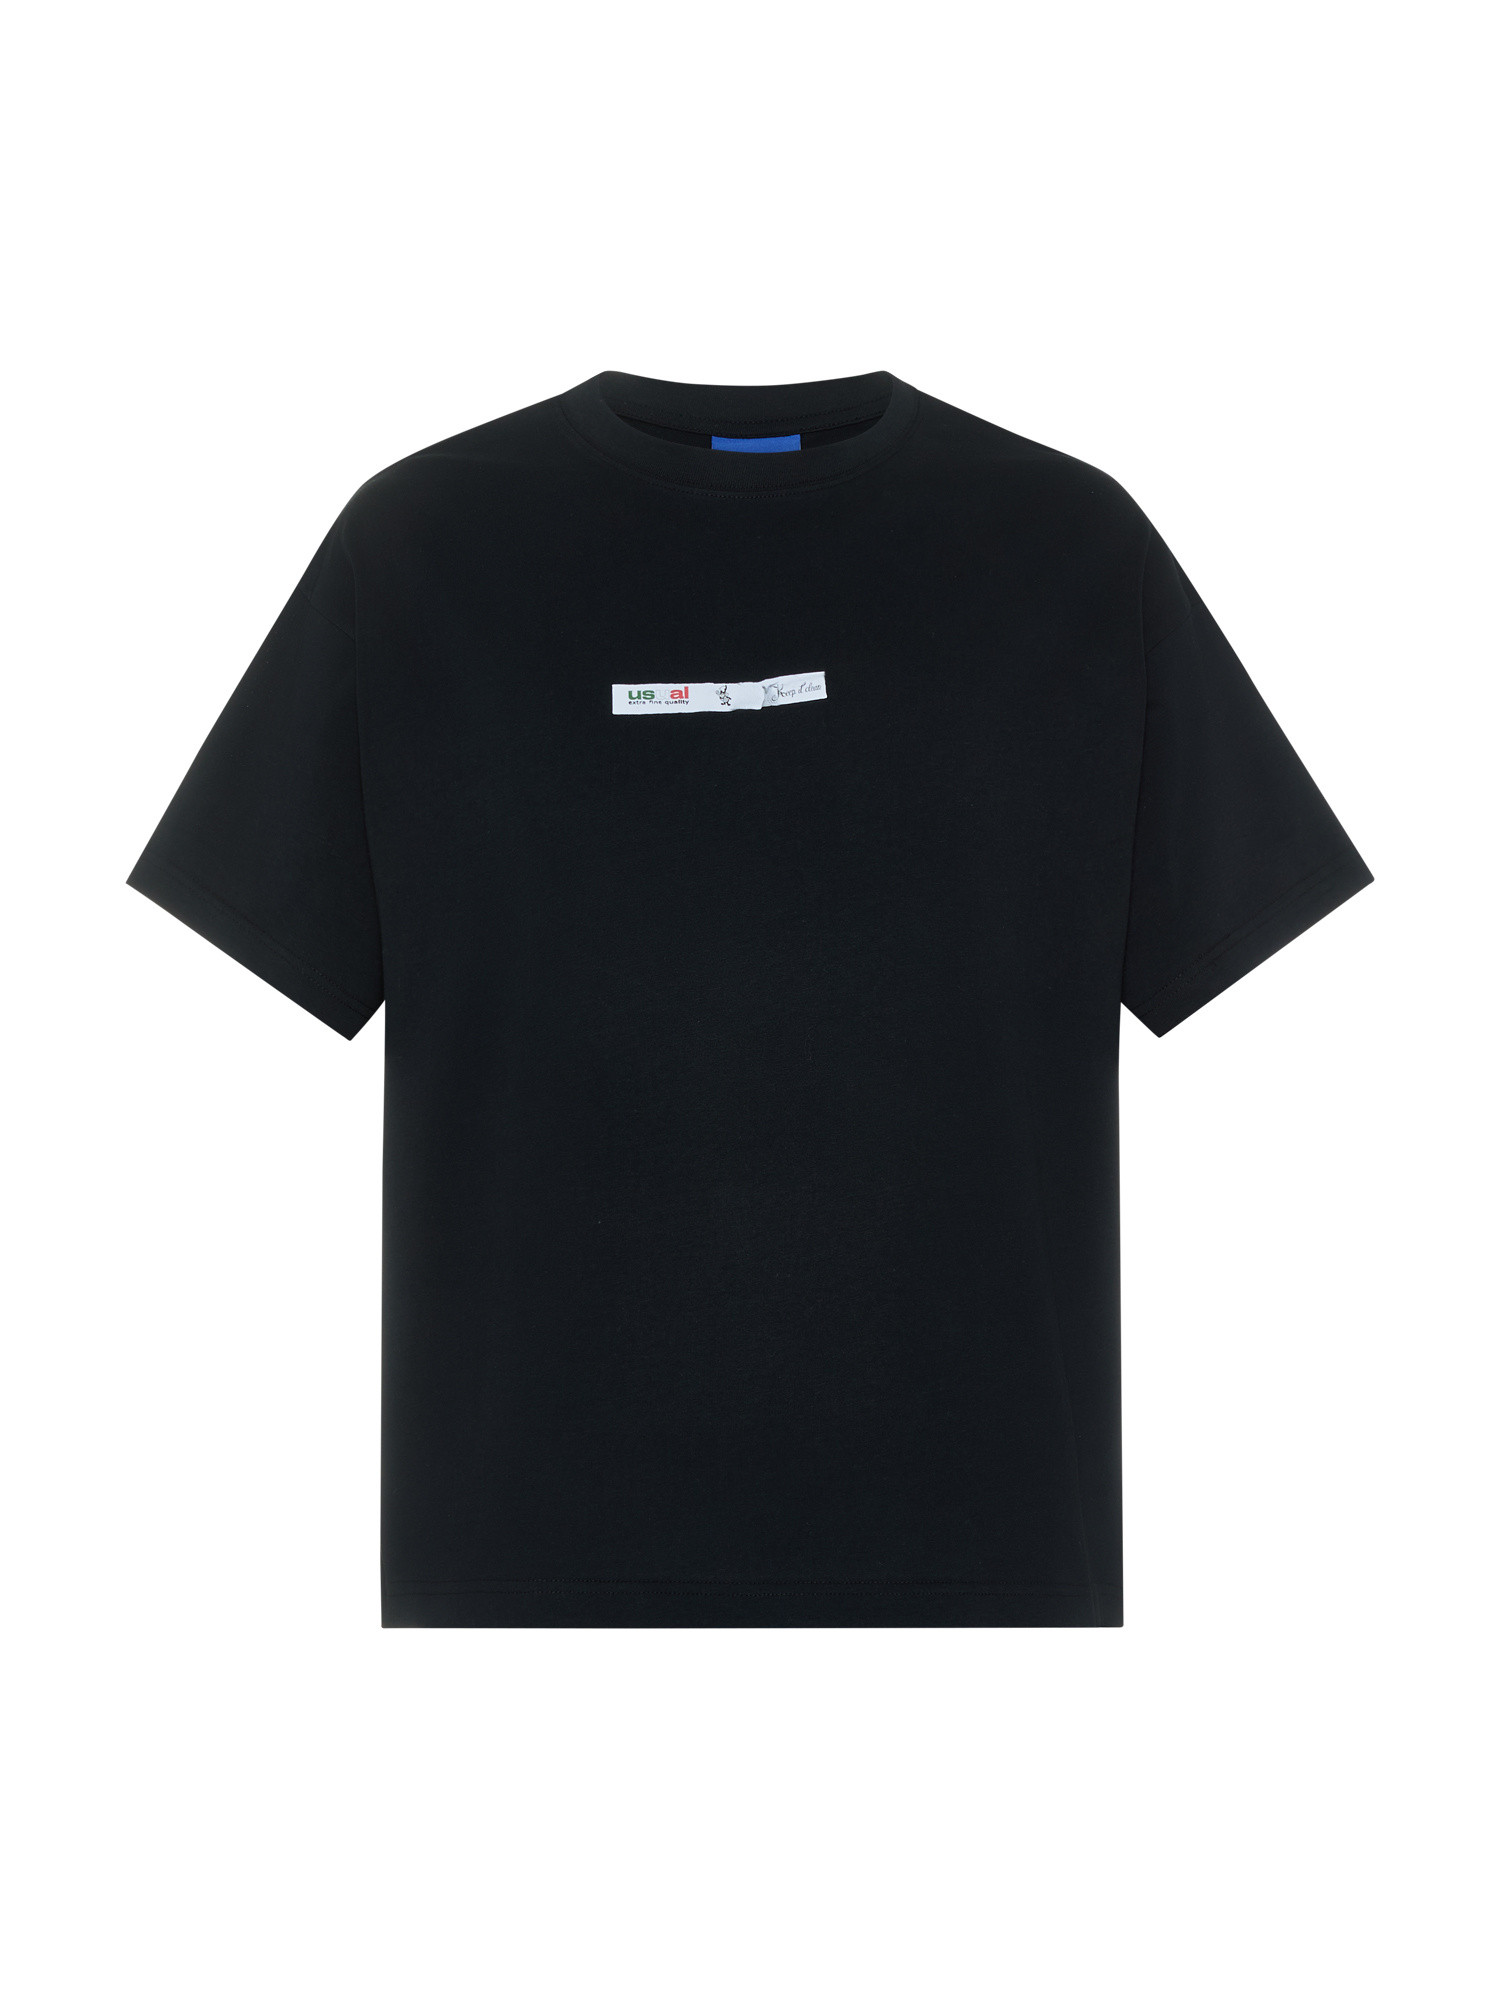 Usual футболка Trattoria с короткими рукавами, черный